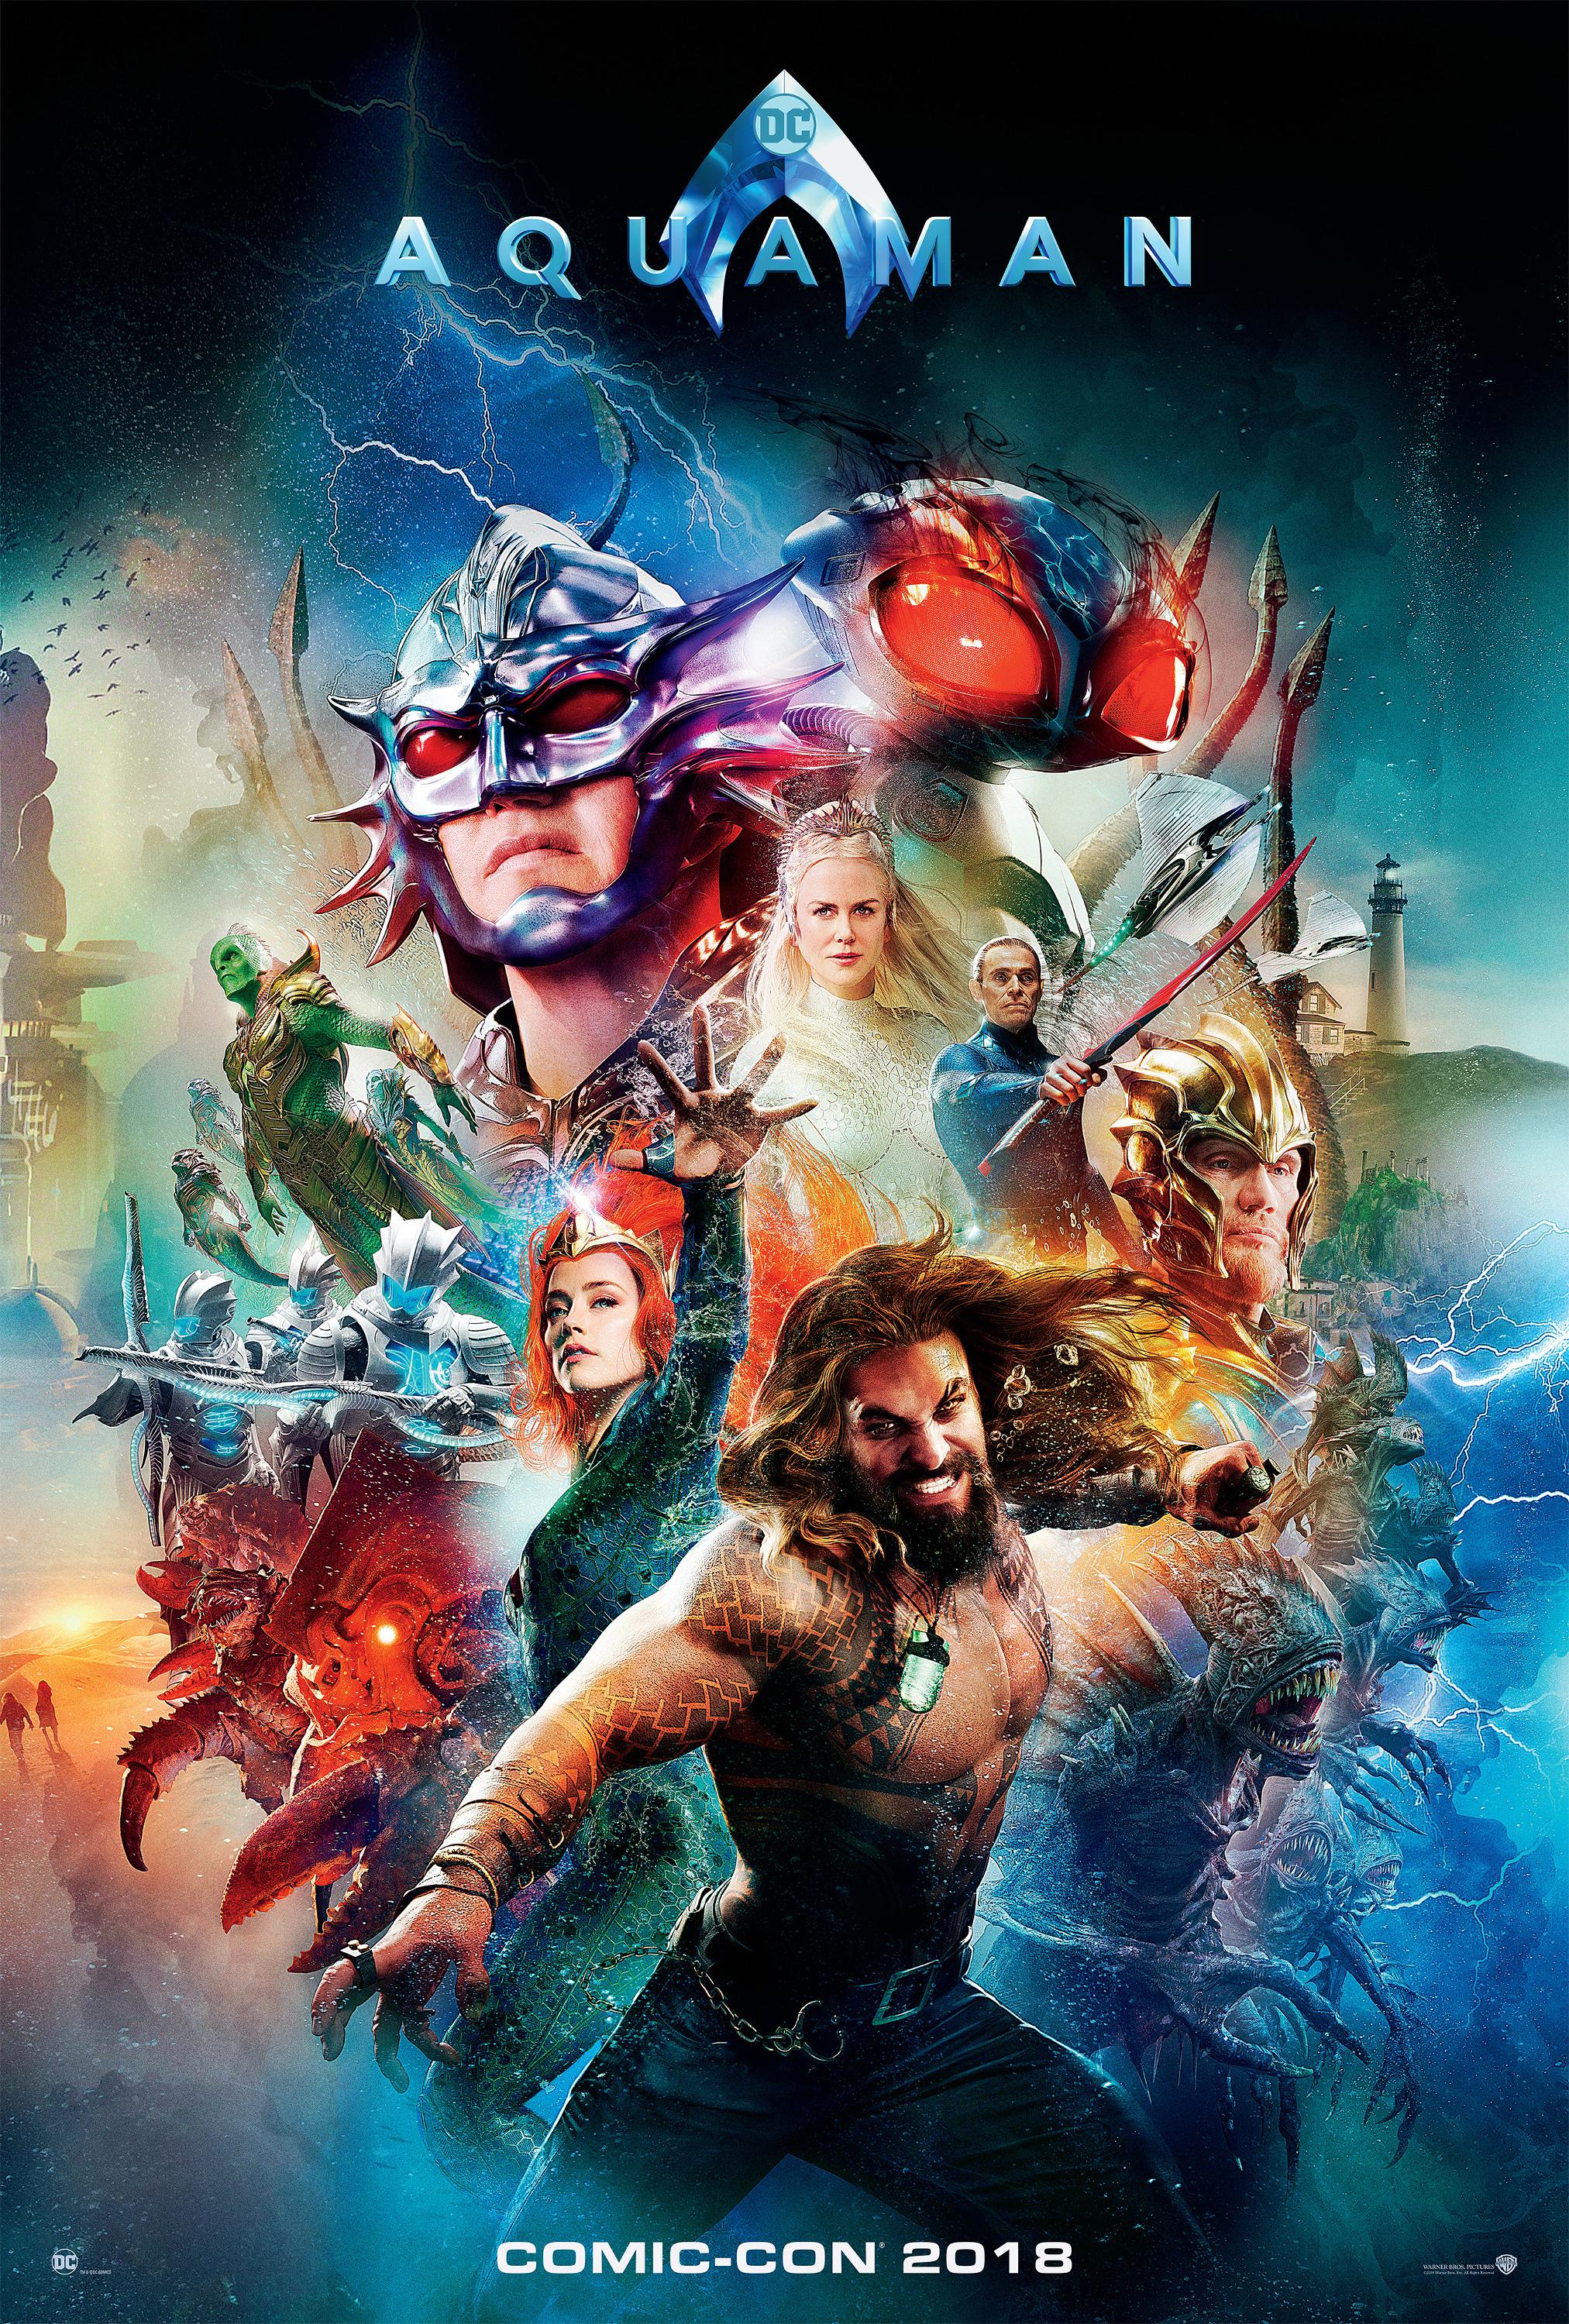 Aquaman (2018) Poster: DC extended universe foto